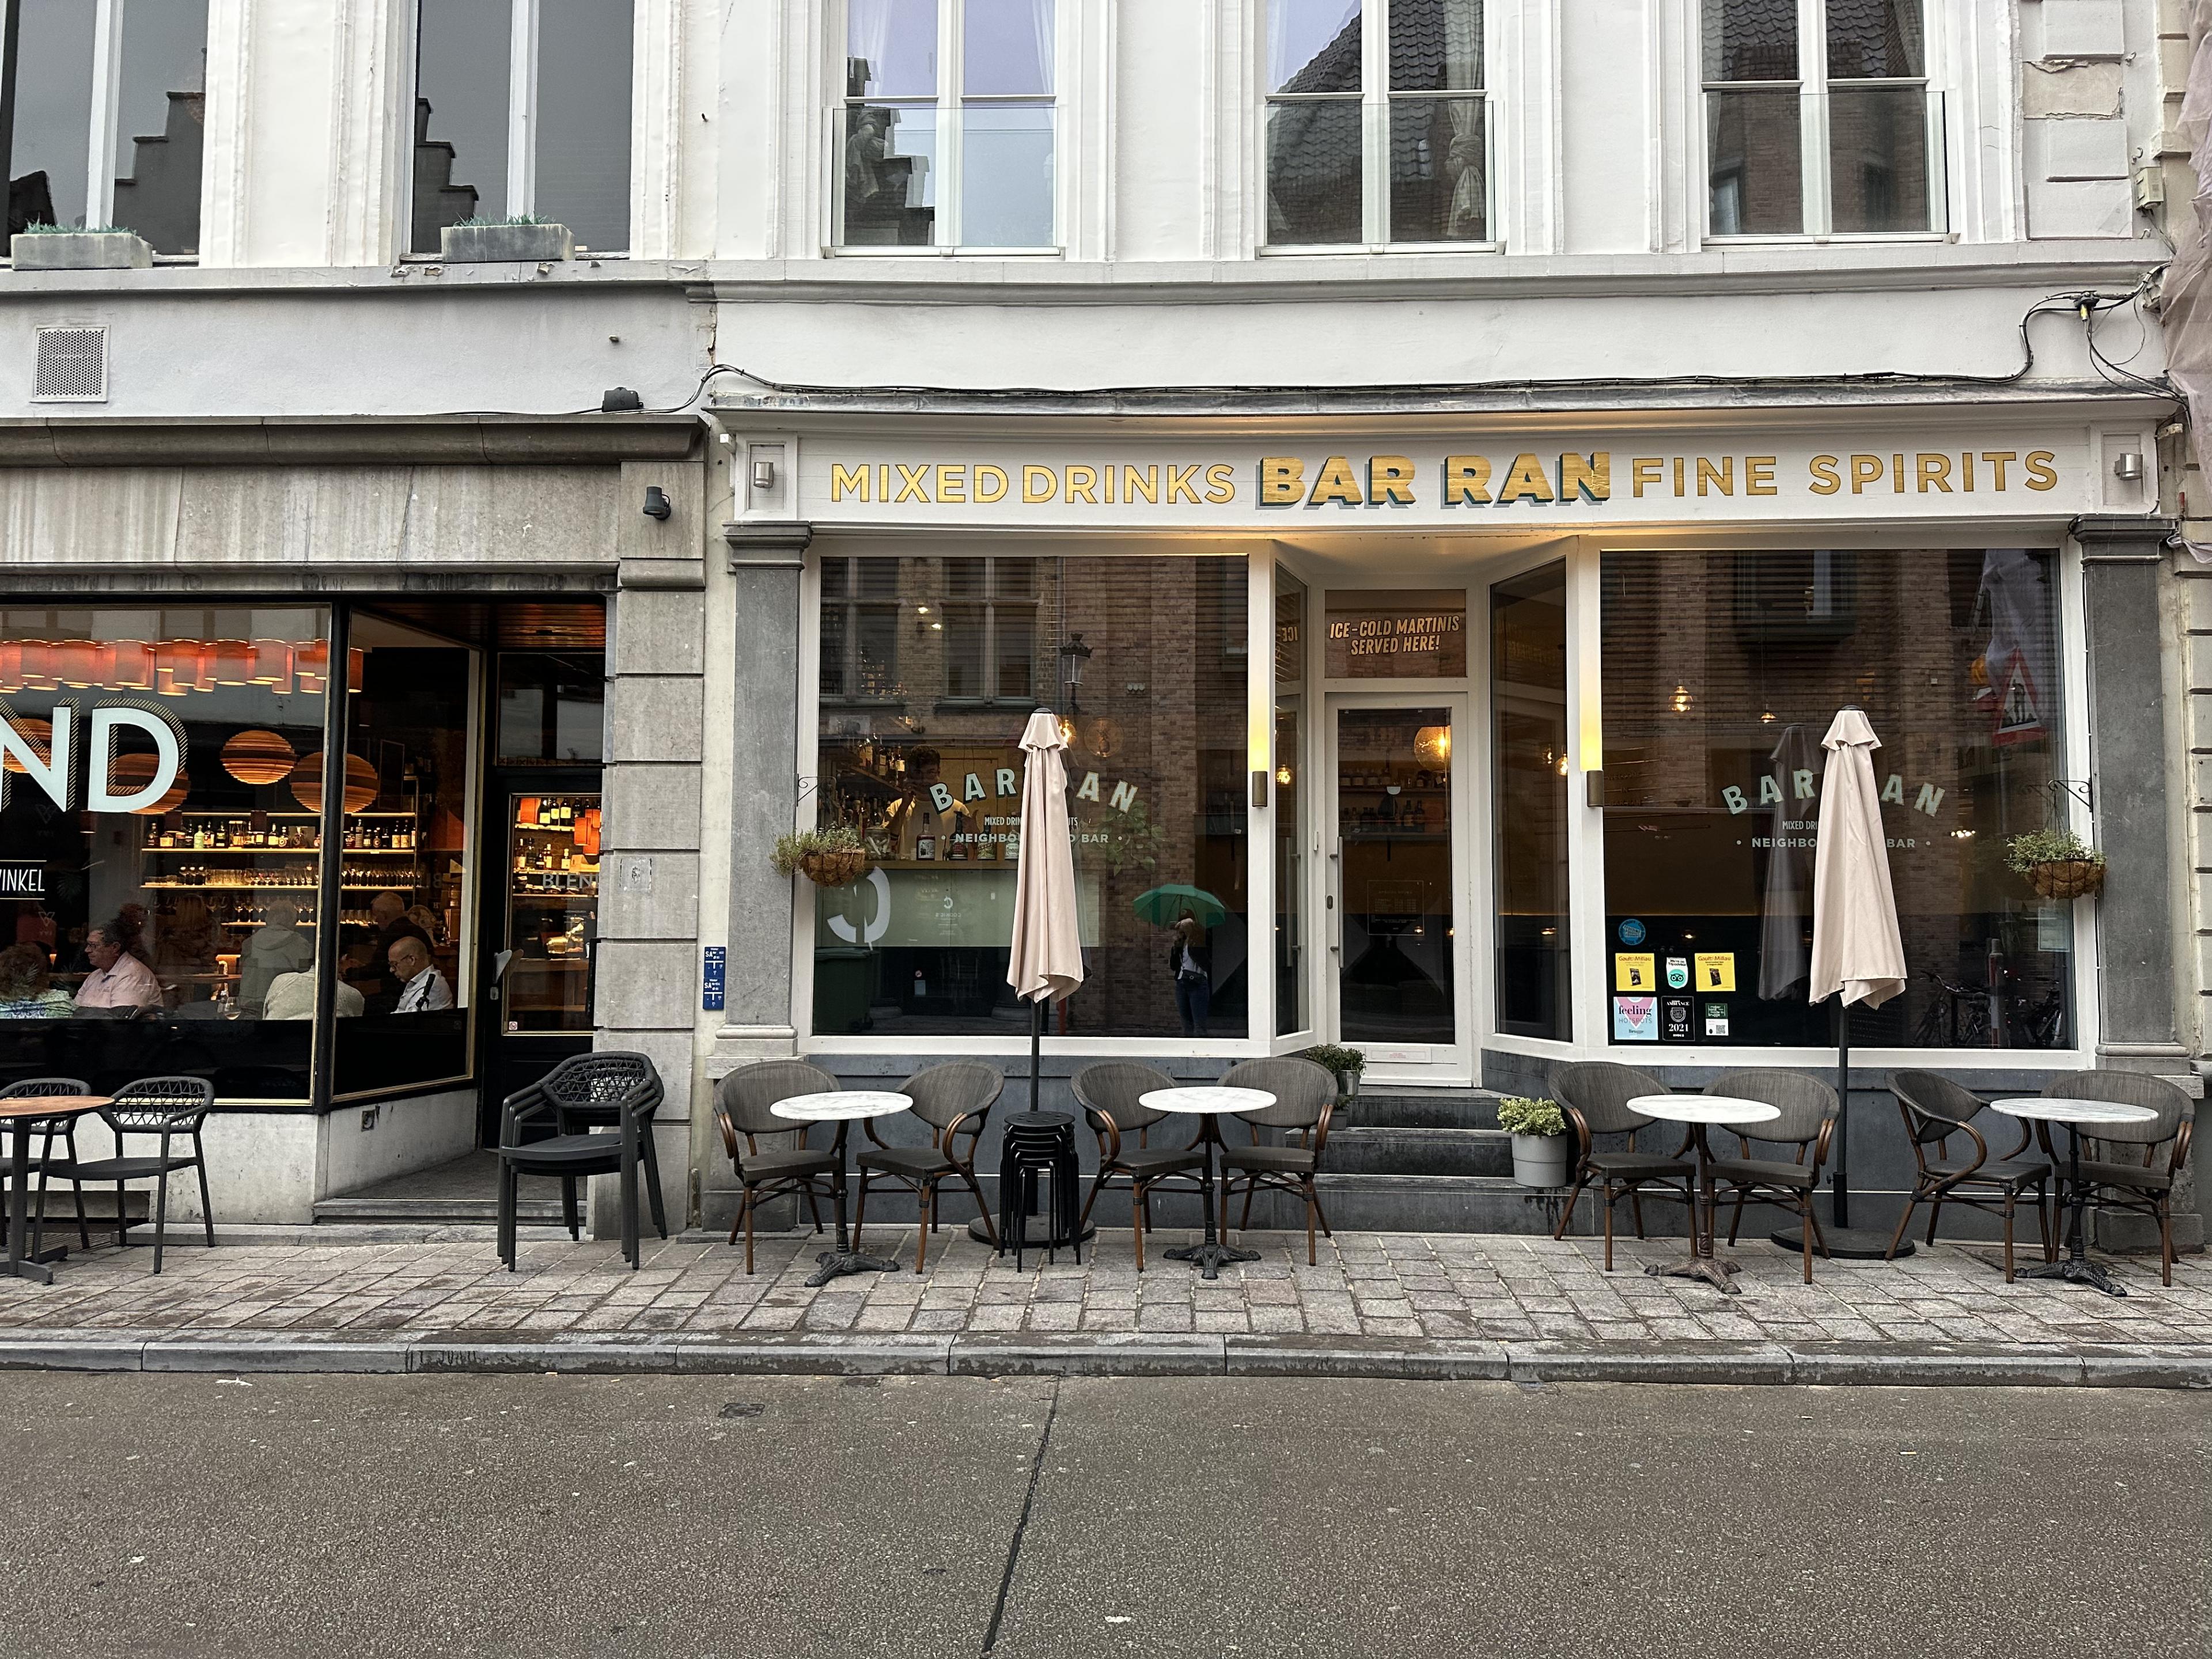 sleek white restaurant exterior with gold lettering